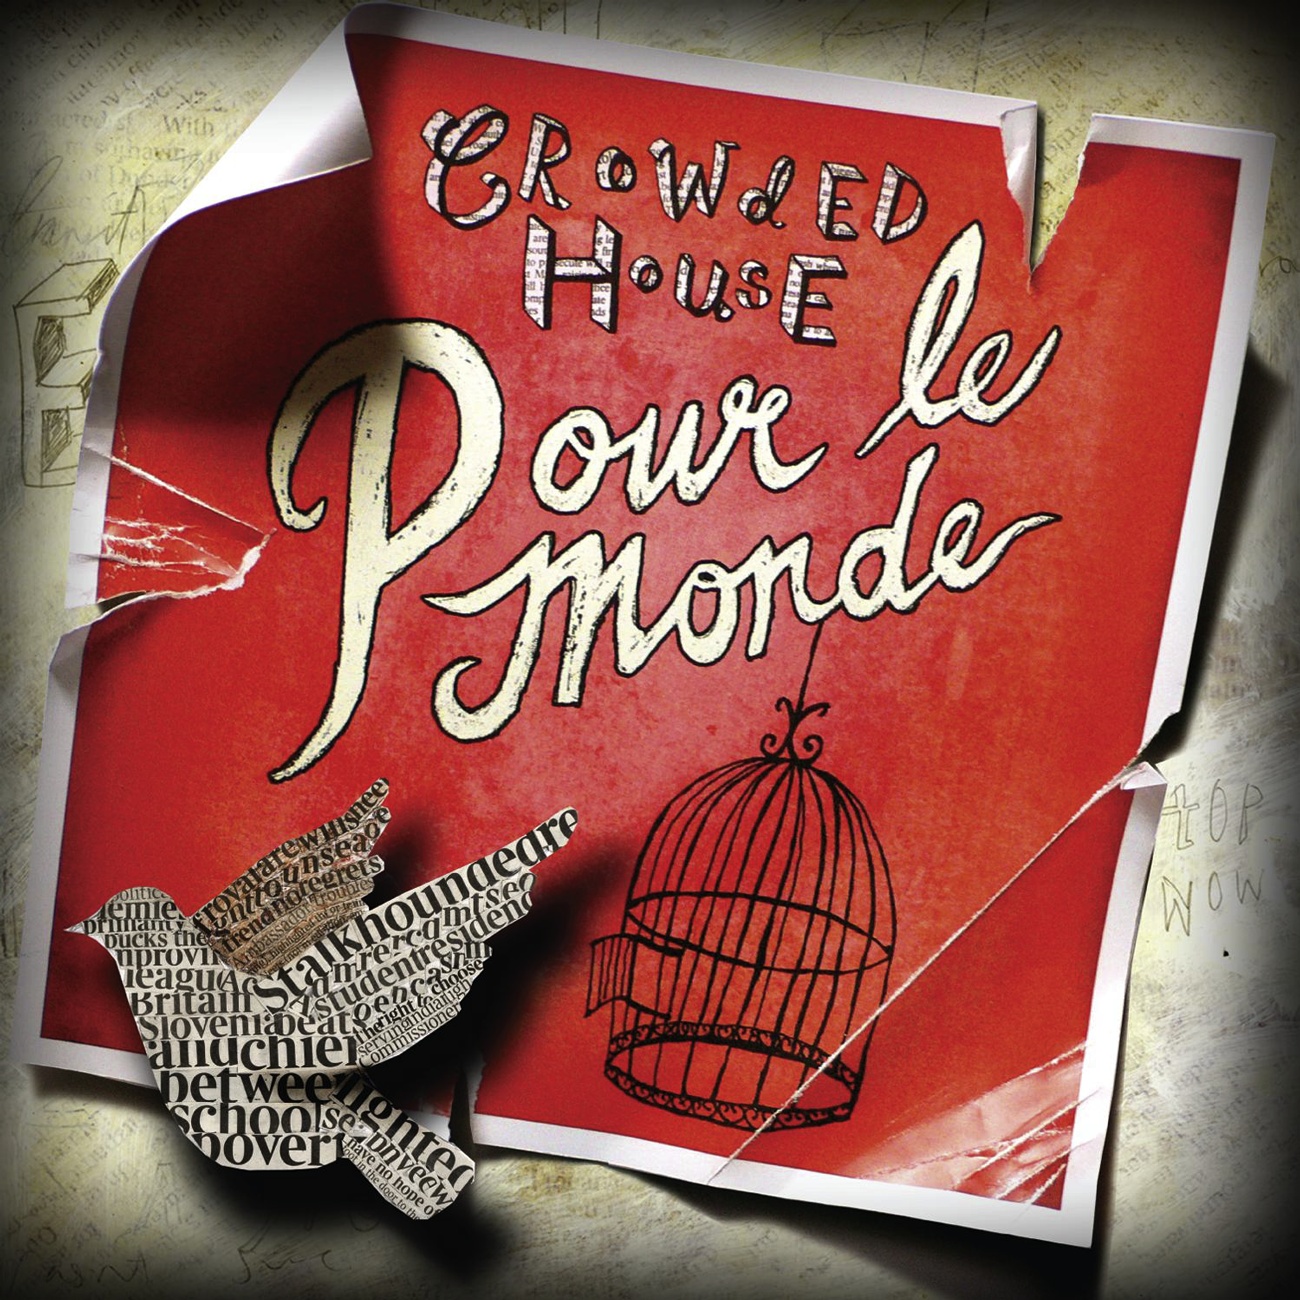 Pour Le Monde (Full Length Radio Mix)